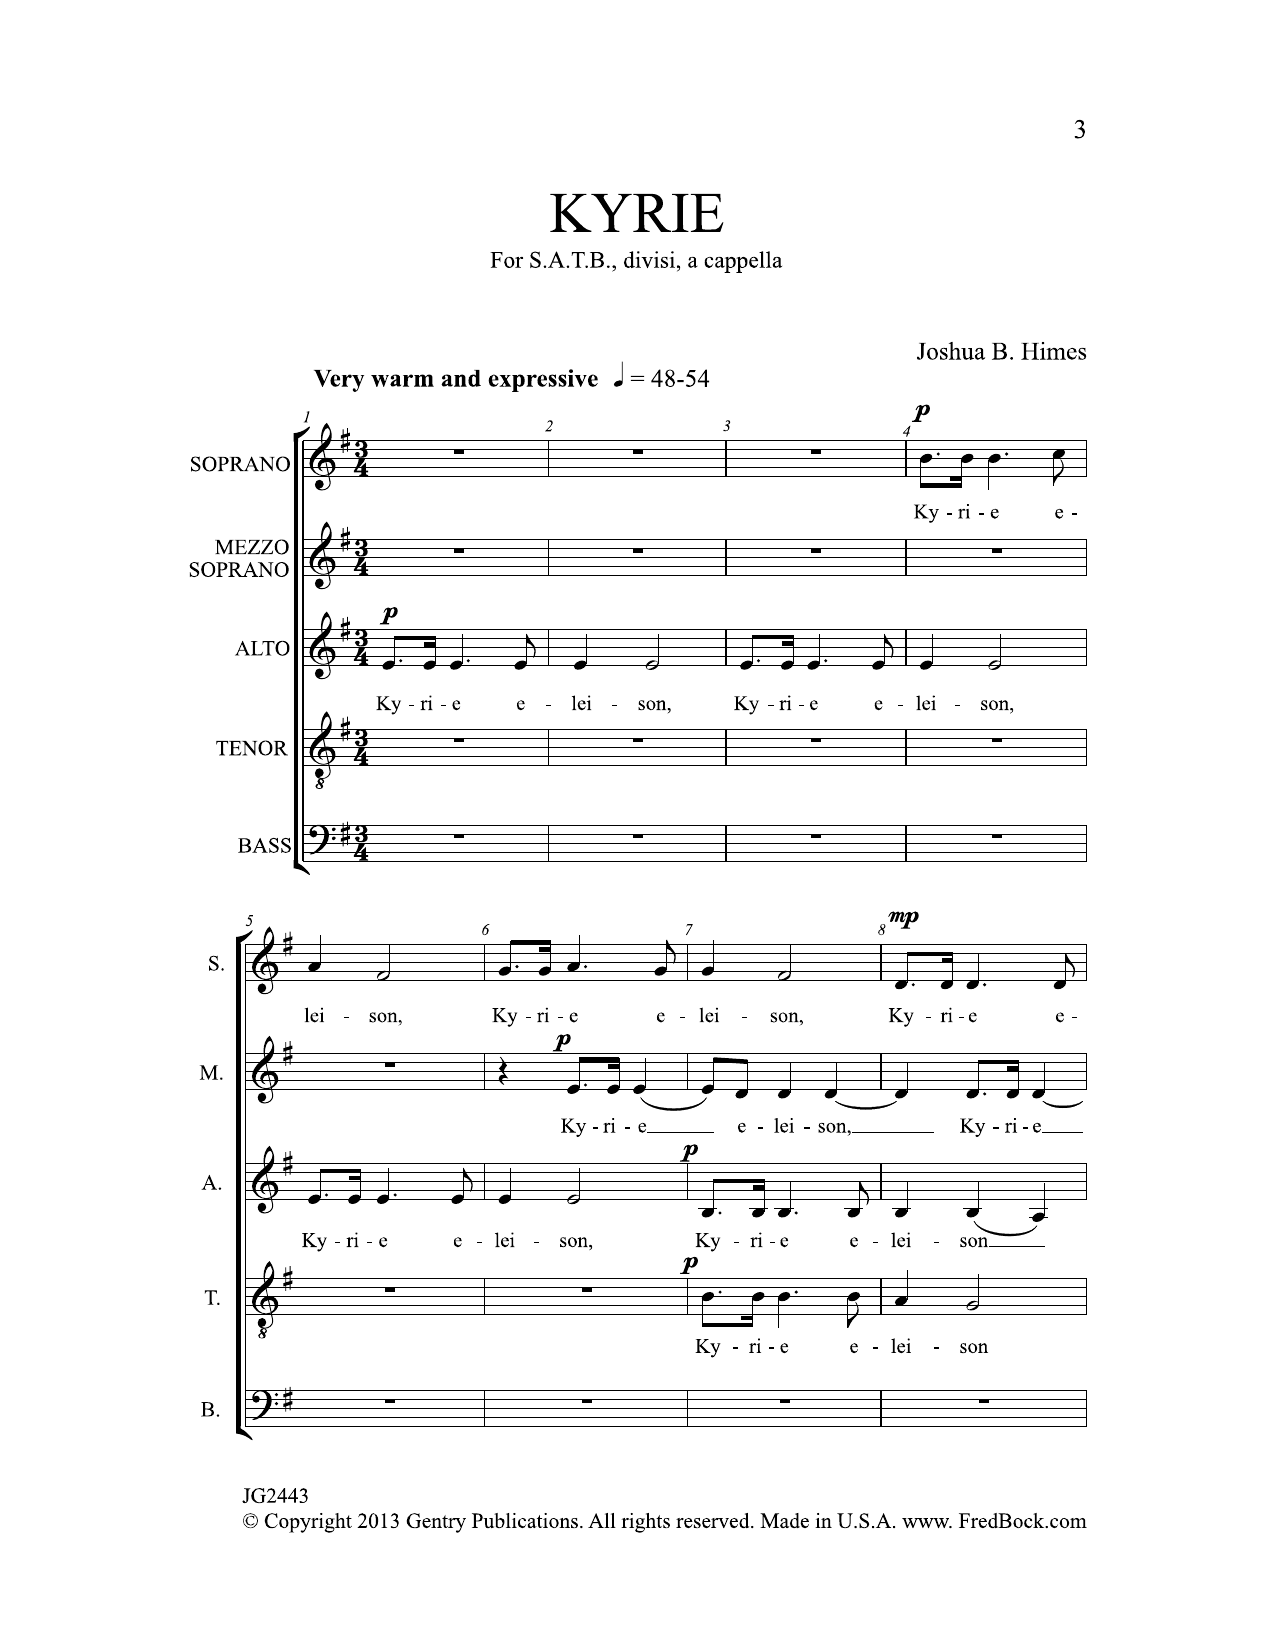 Joshua B. Himes Kyrie Sheet Music Notes & Chords for SATB Choir - Download or Print PDF